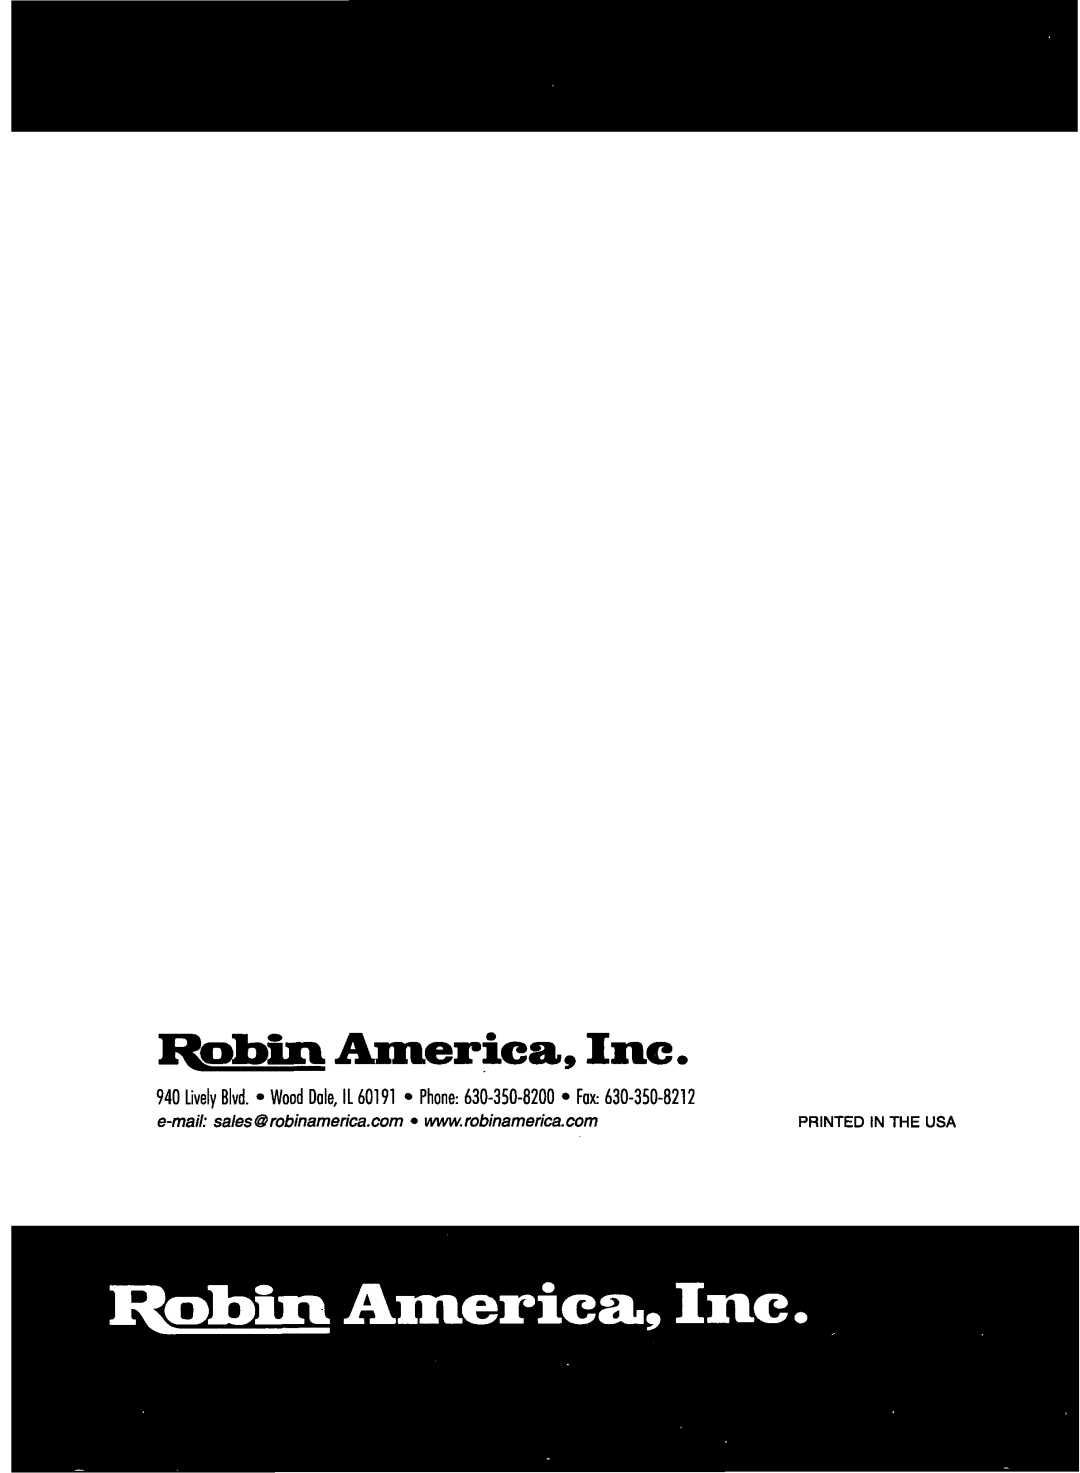 Subaru Robin Power Products R650 manual RobinAmerica, Inc, e-mail sales, Printedthein 